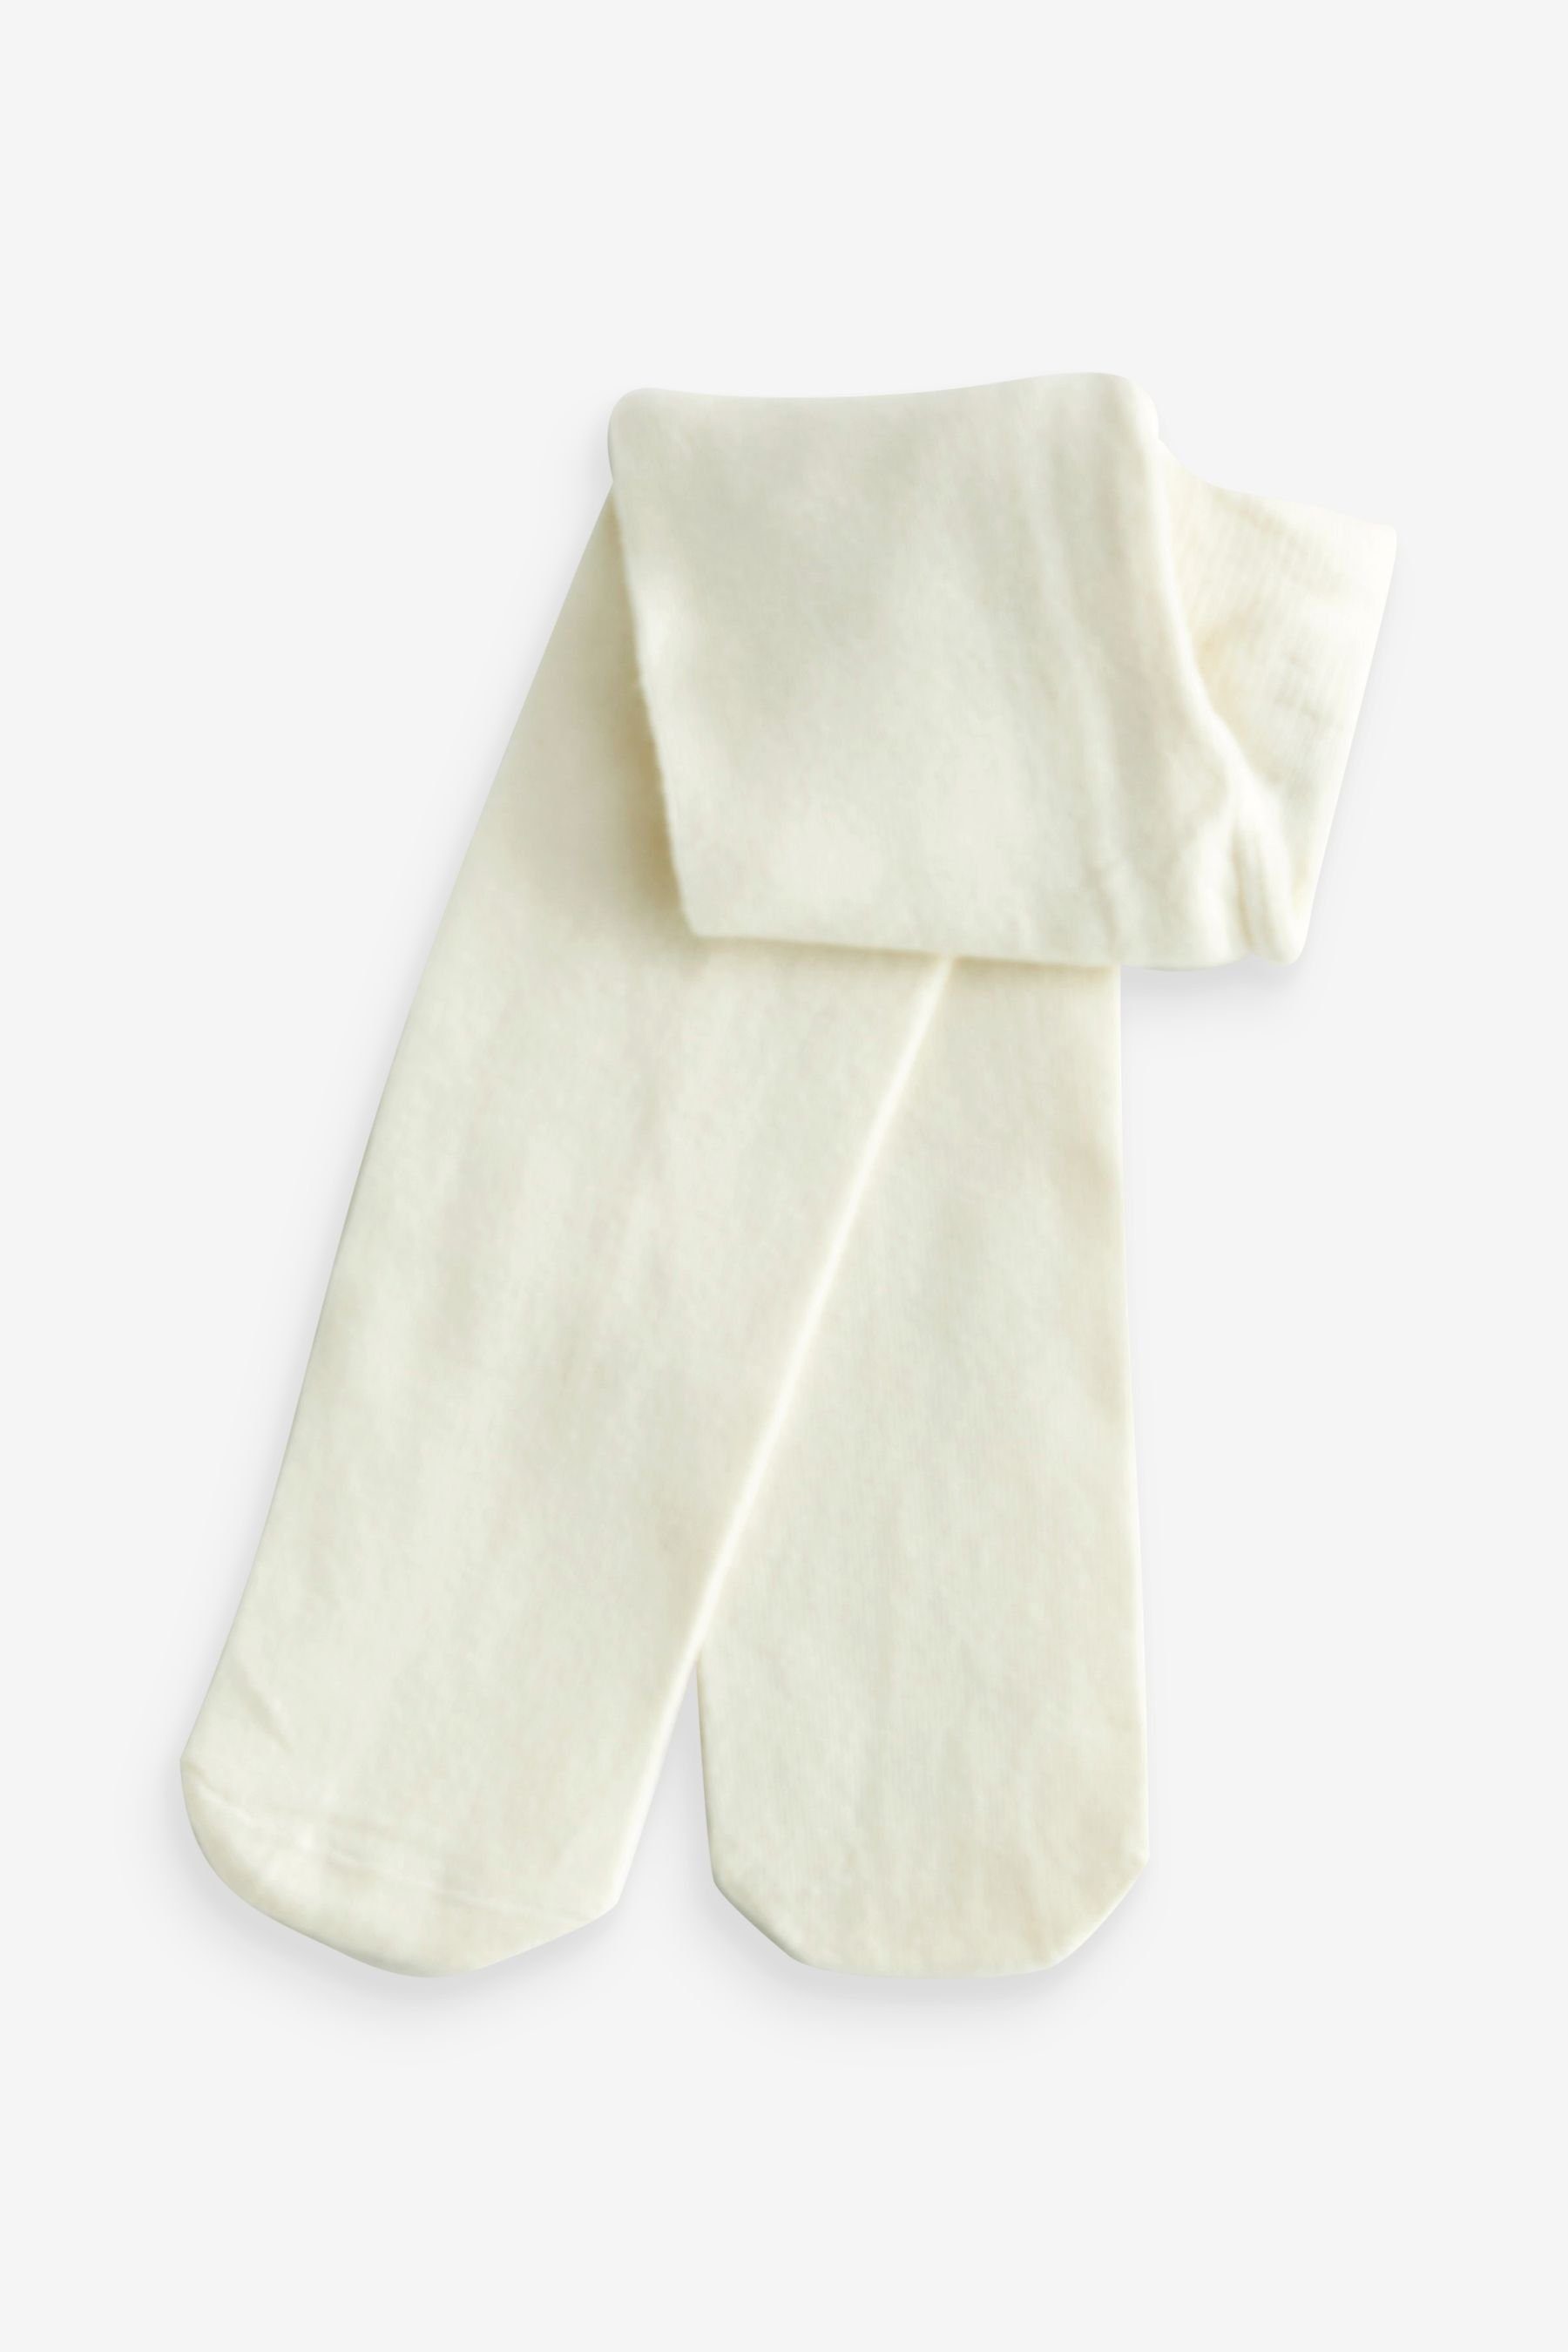 Next Strickpullover Baby-Pullover-Set mit Hose, (3-tlg) passende Strumpfhose